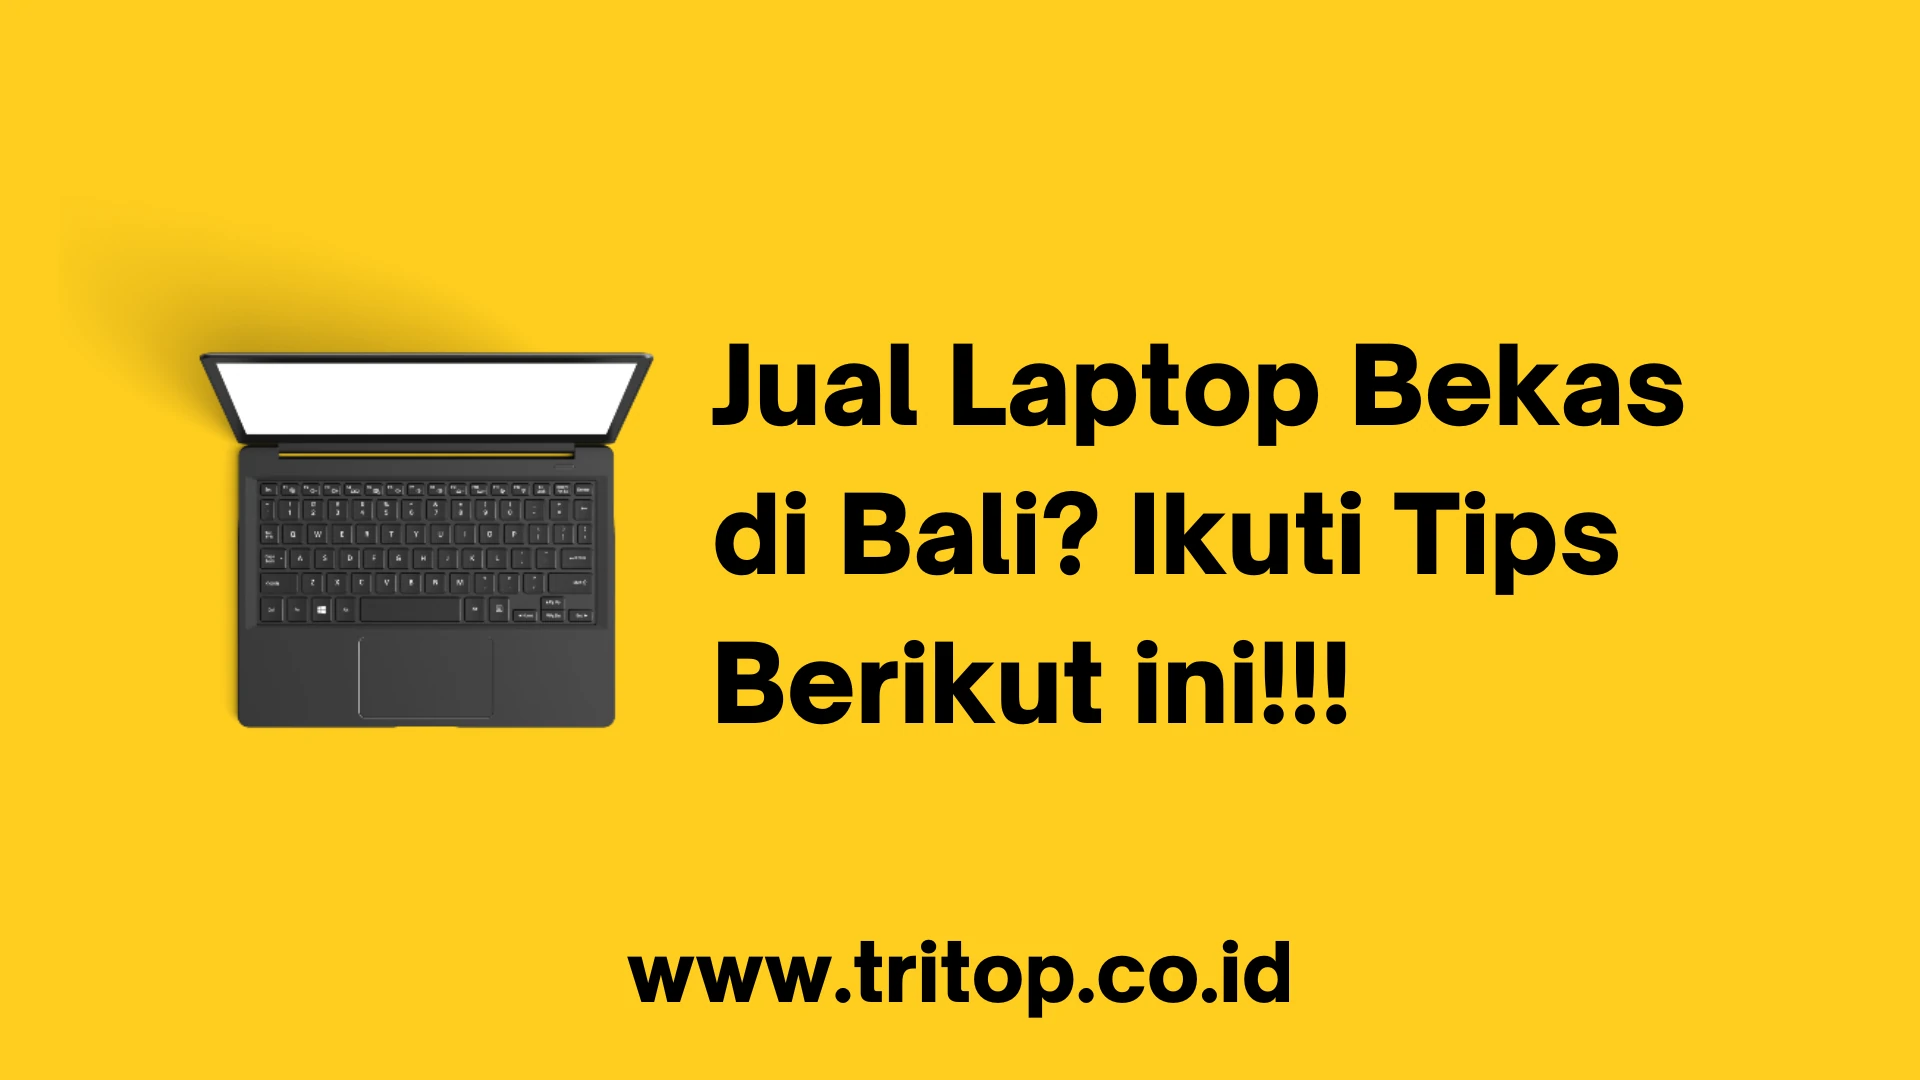 Jual Laptop Bekas Bali